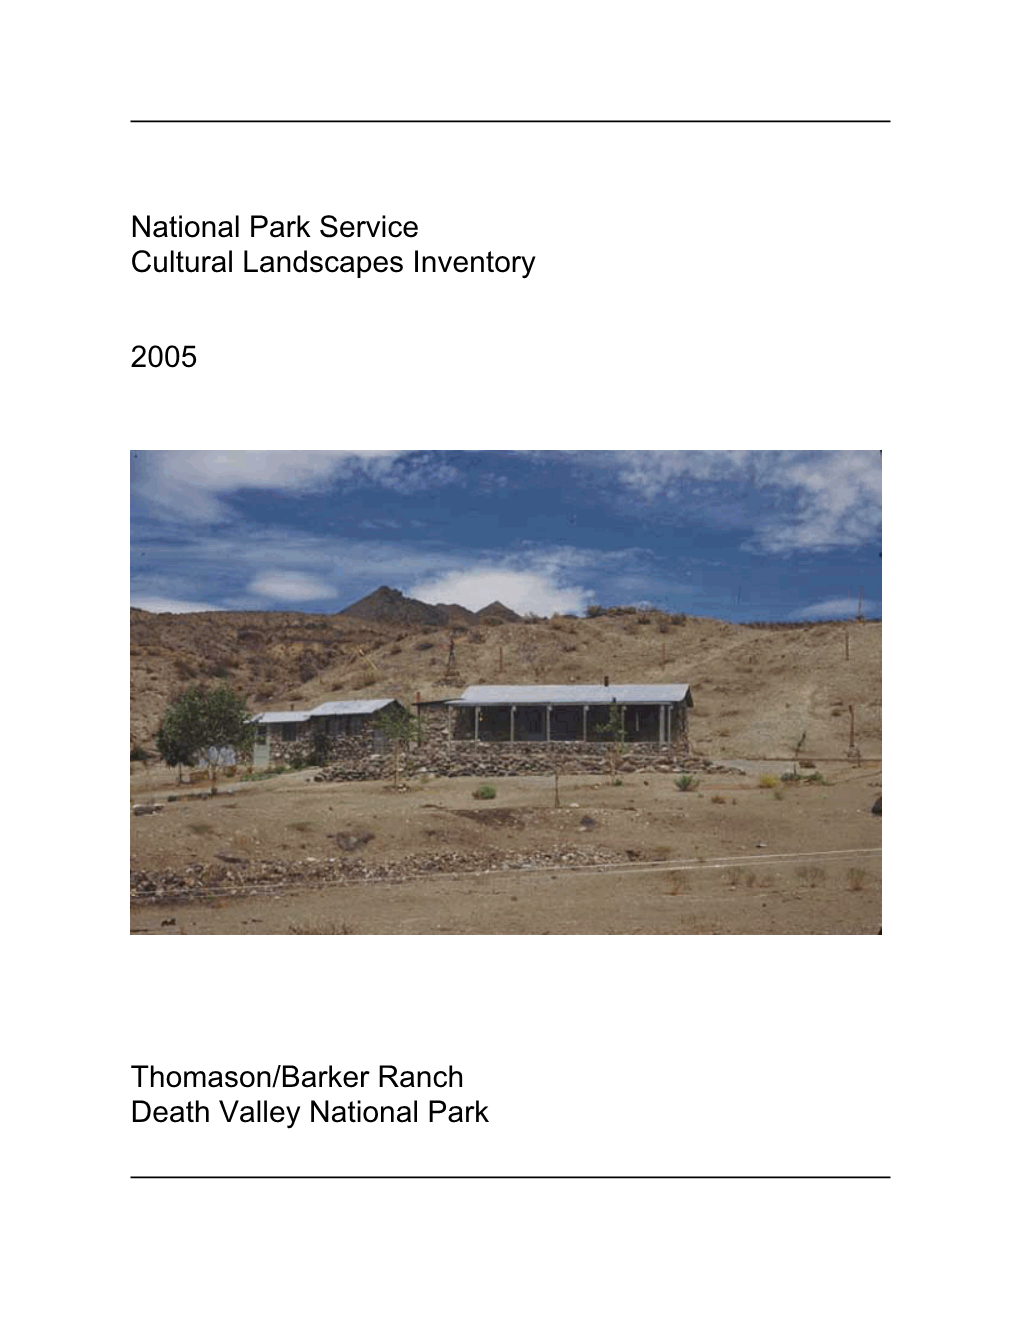 National Park Service Cultural Landscapes Inventory Thomason